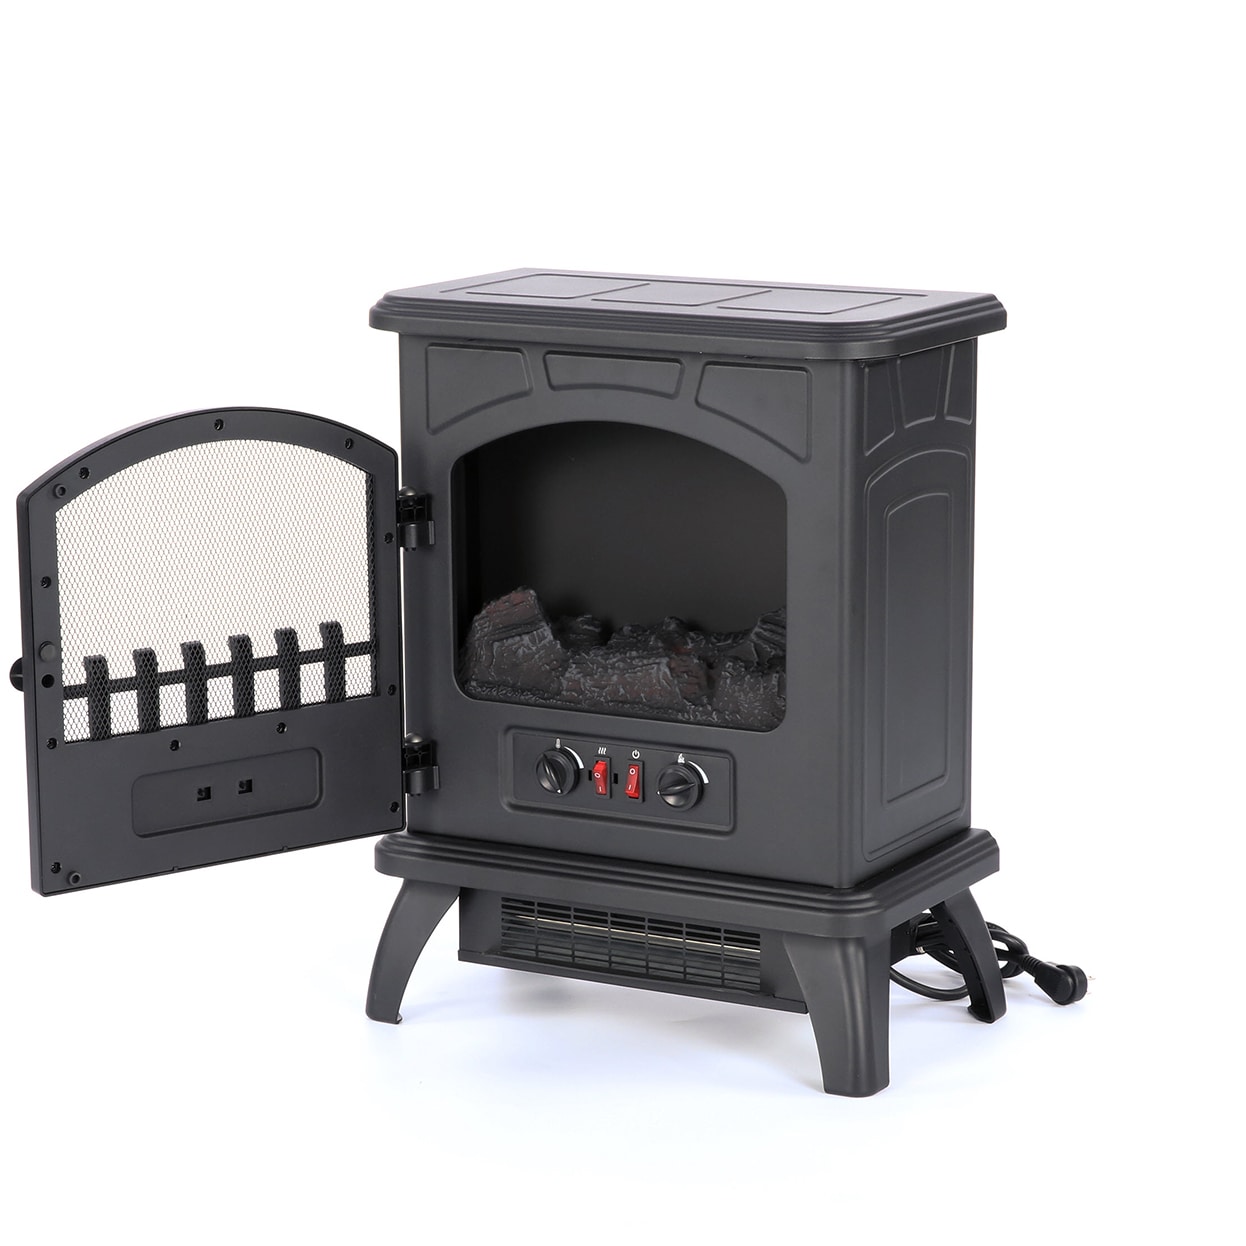 Duraflame Ceramic Desktop Space Heater - Black, 1 ct - Ralphs